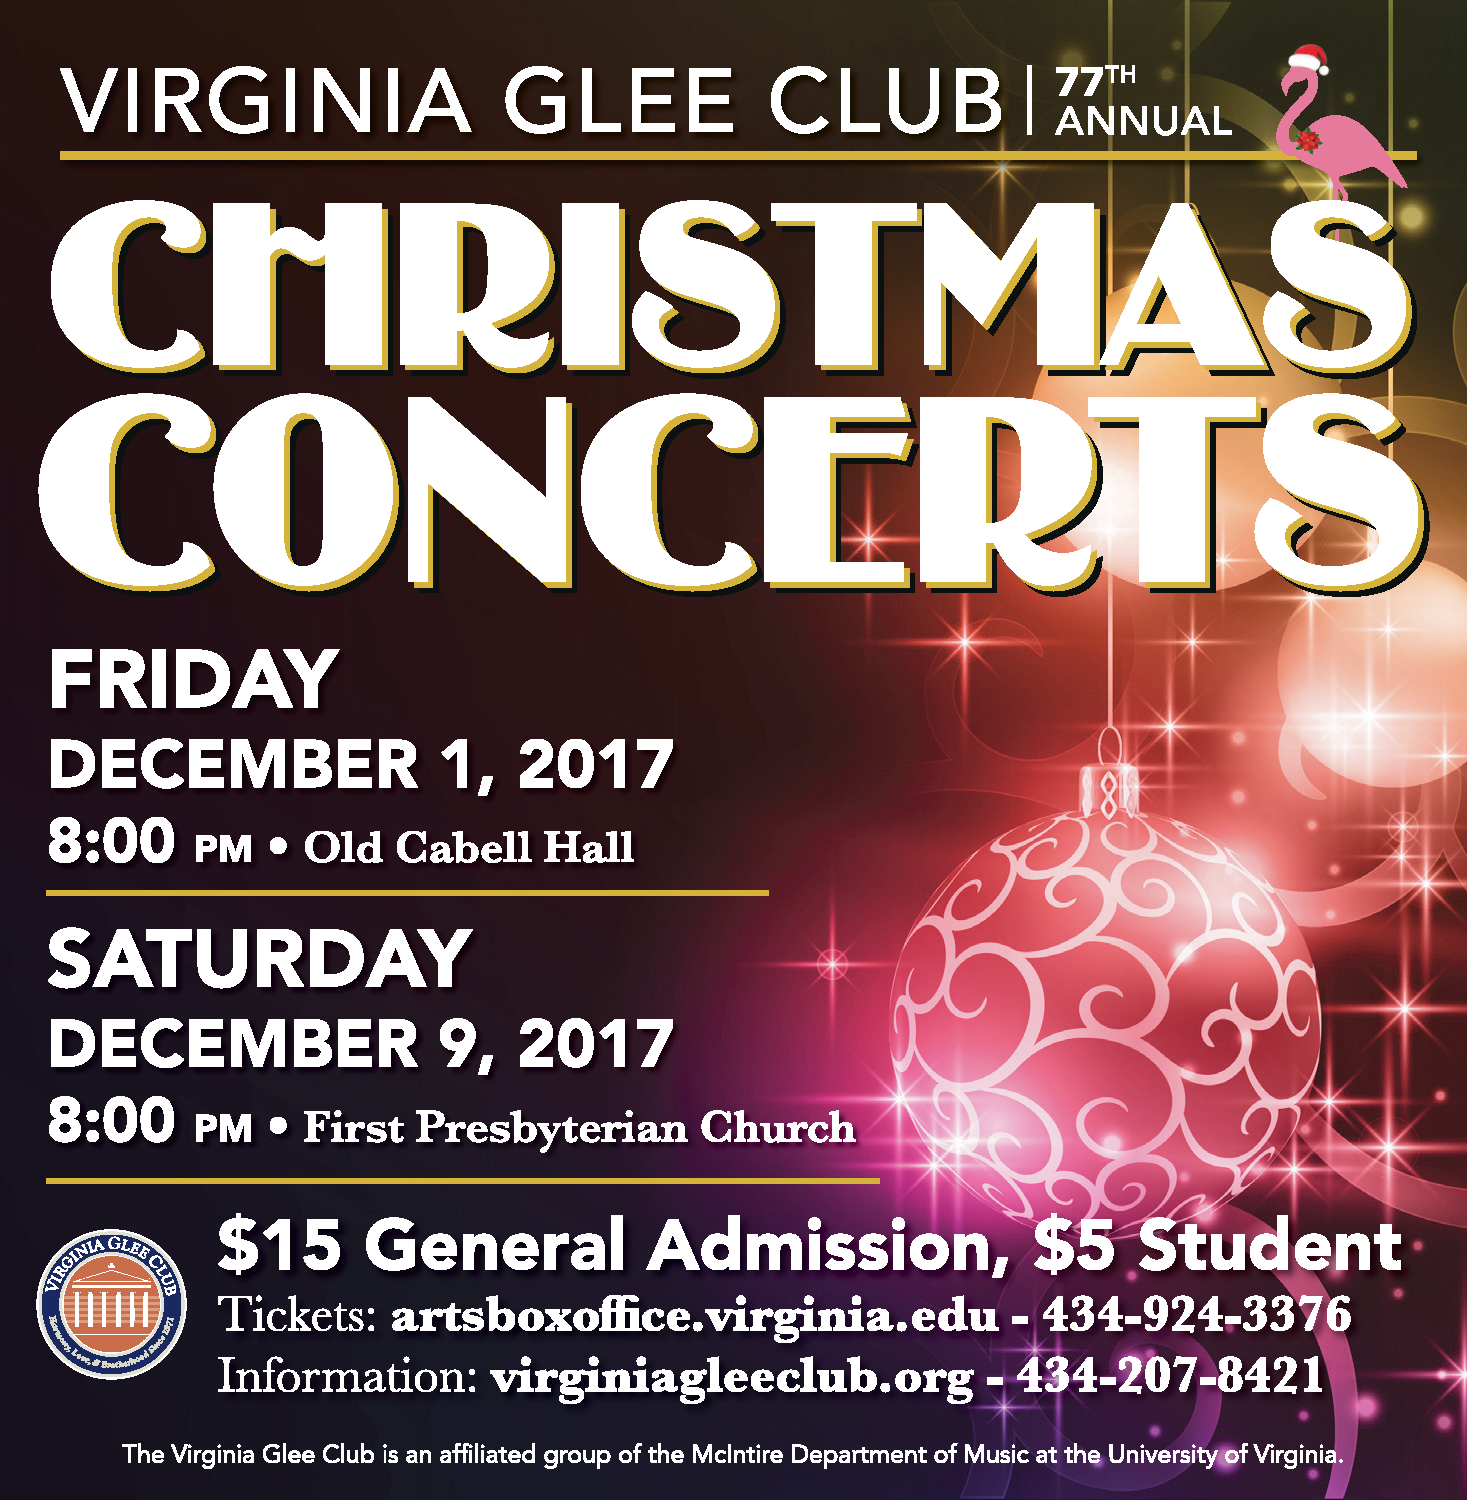 77th Annual VGC Christmas Concert - Dec 9 - First Presbyterian Church